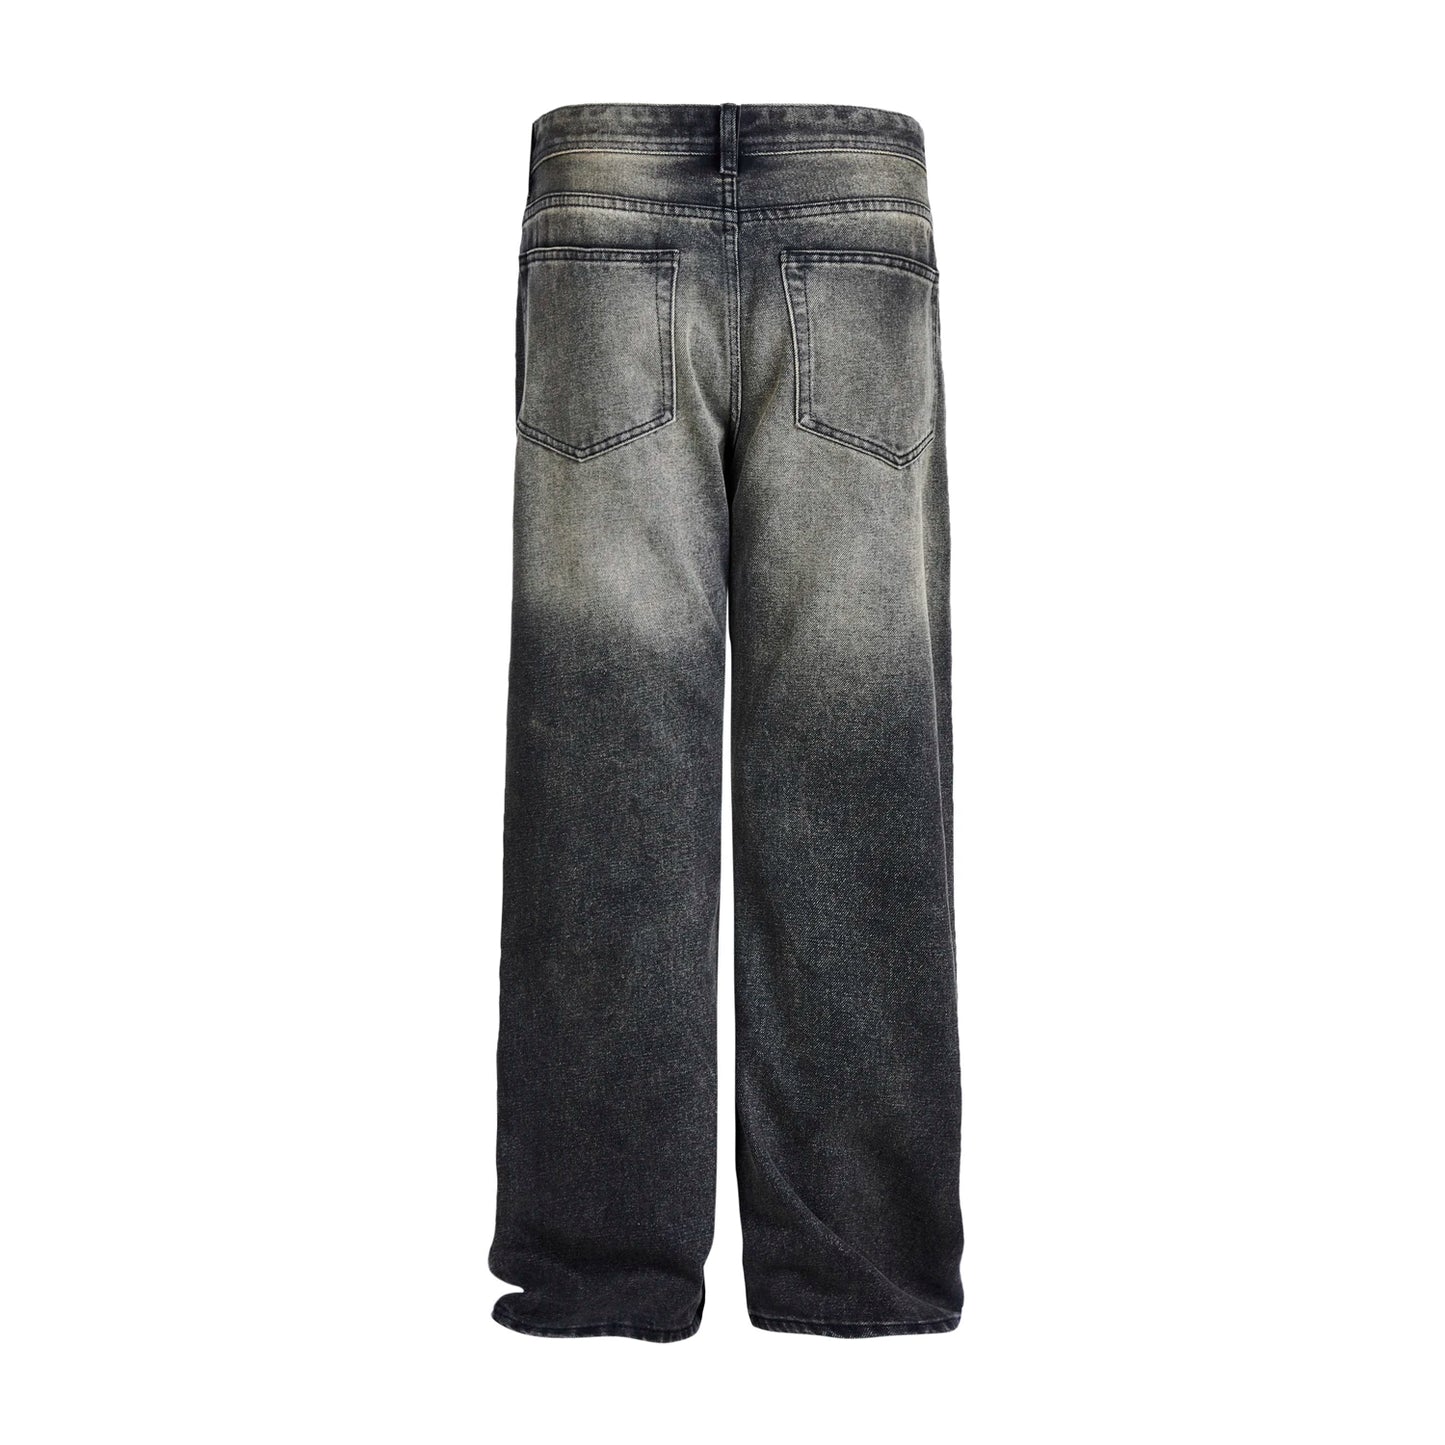 Haruja - Black Washed Jeans